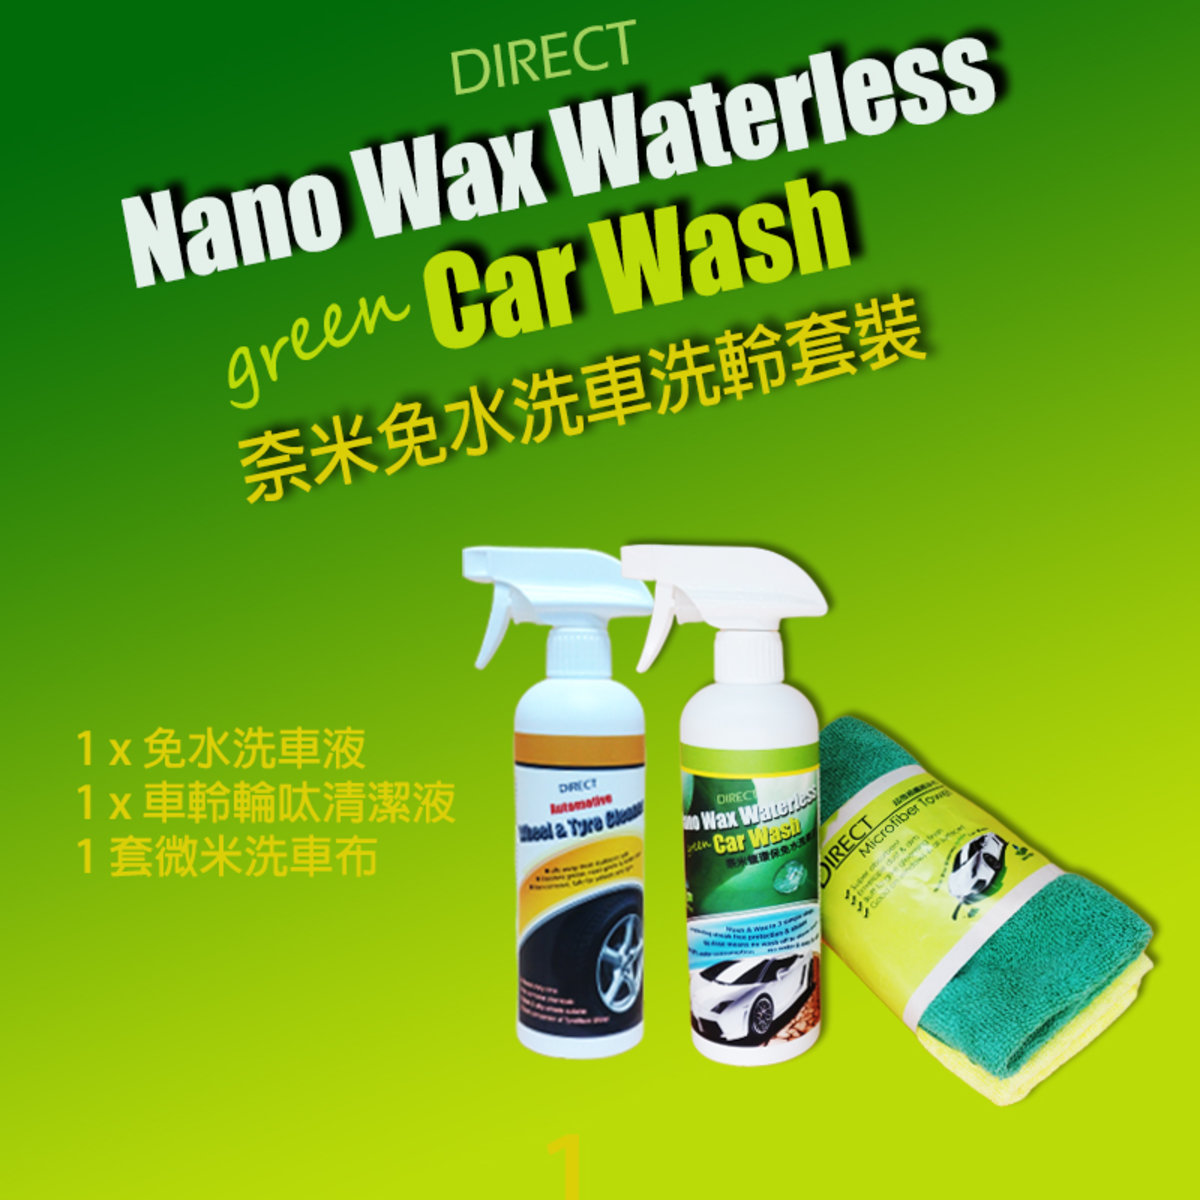 Nano Wax Waterless Carwash & Wheel Cleaner Package